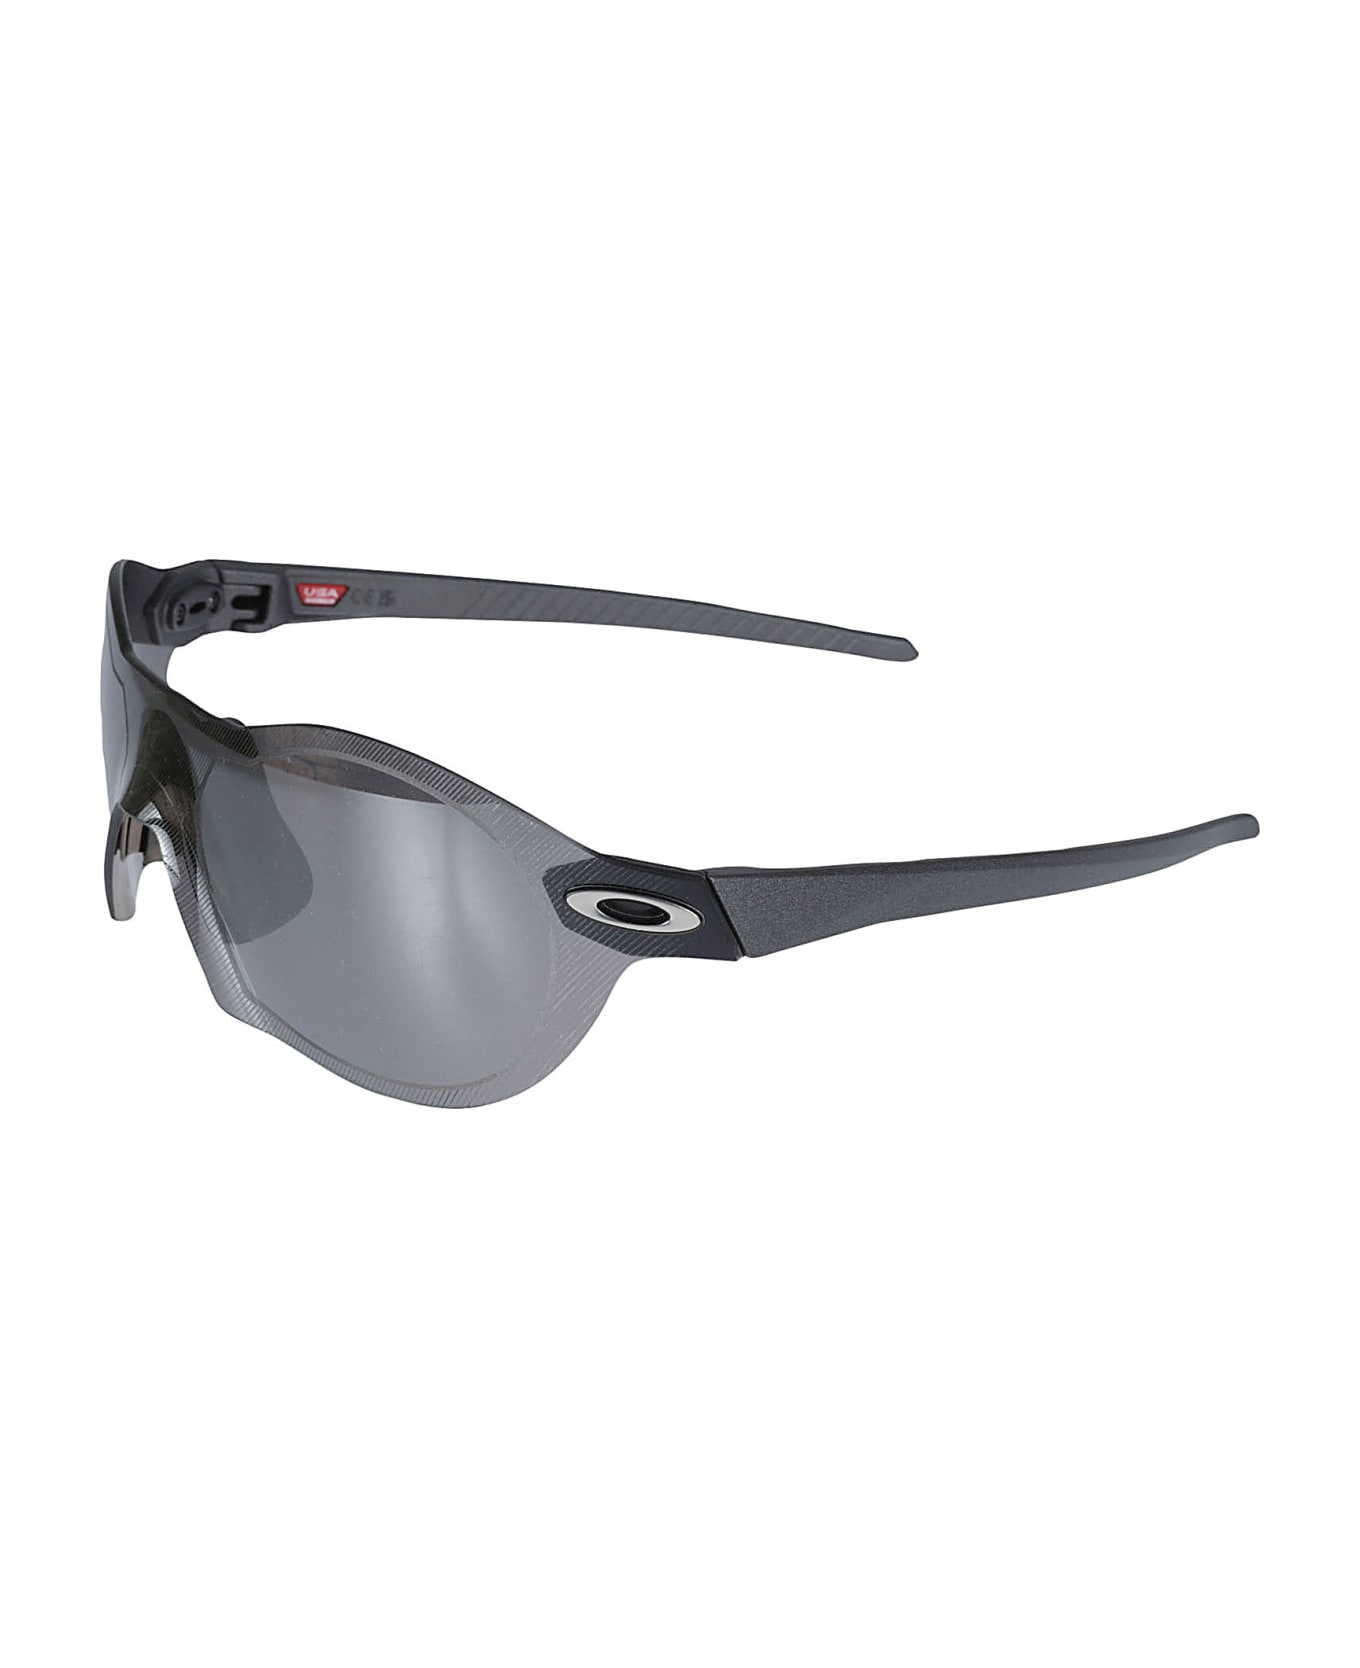 Oakley Sole Shield Sunglasses - 909801 サングラス